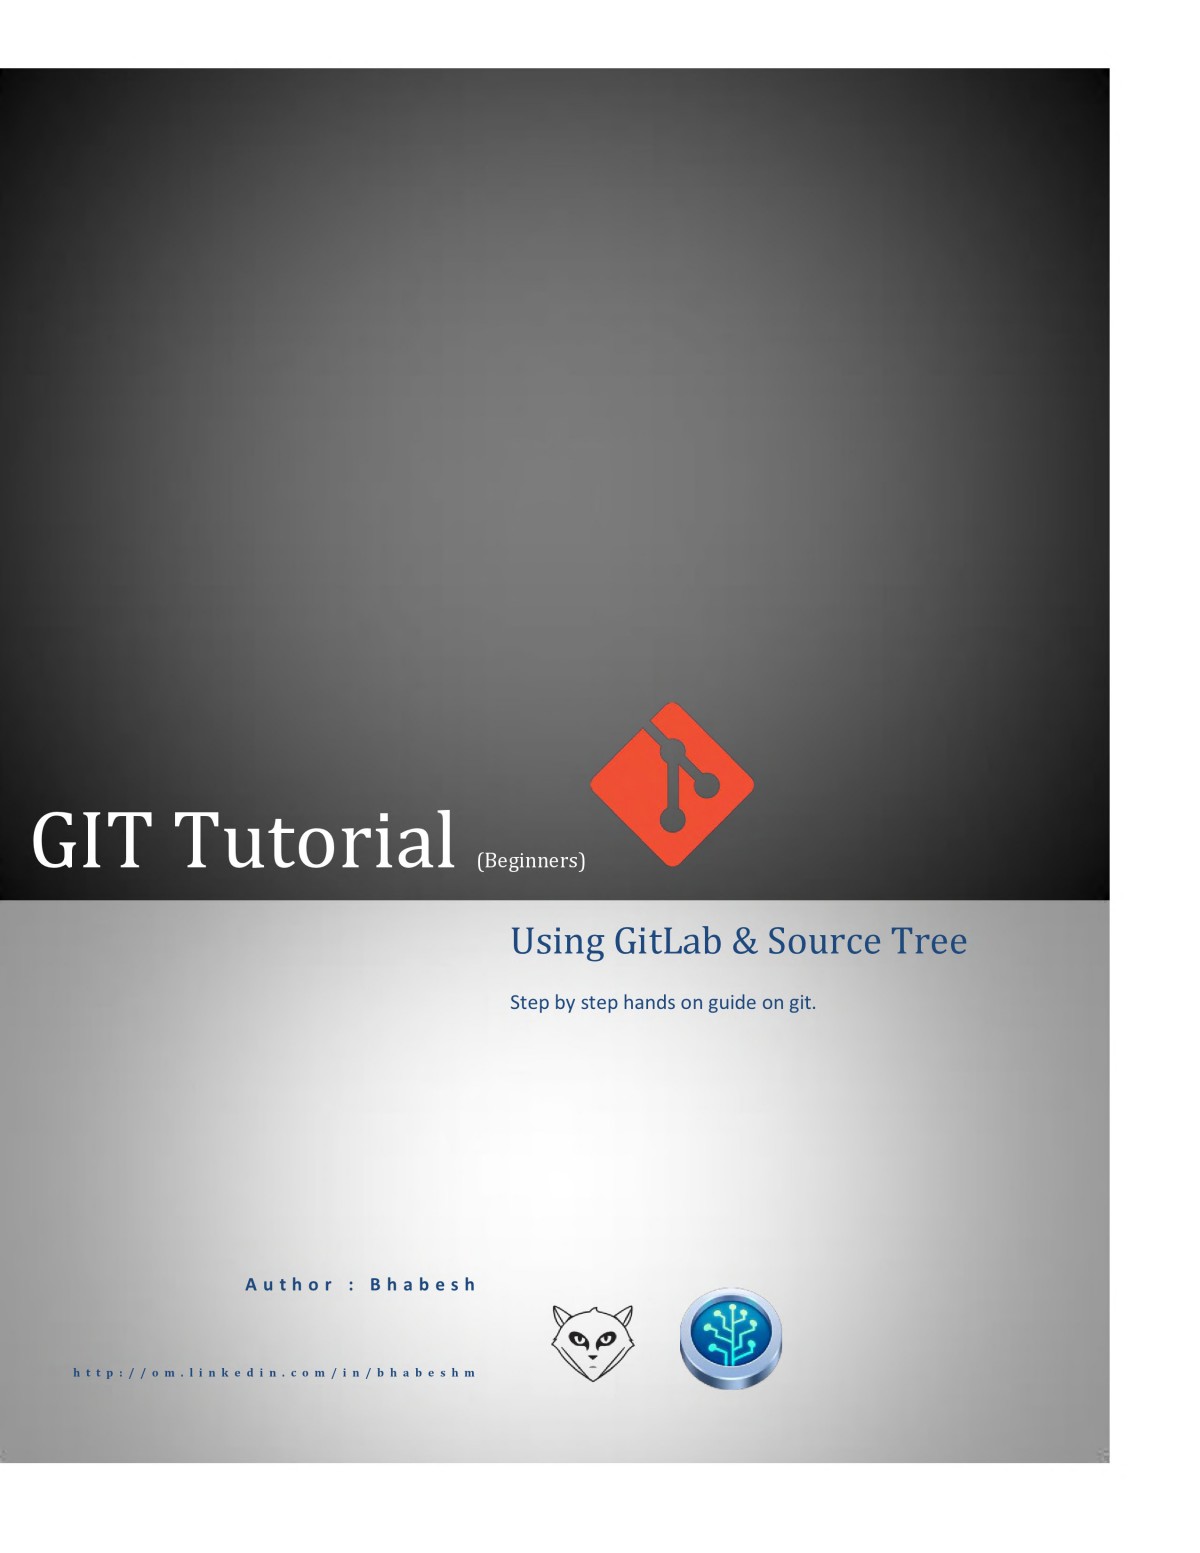 Git Tutorial (Beginner): Using GitLab & Source Tree